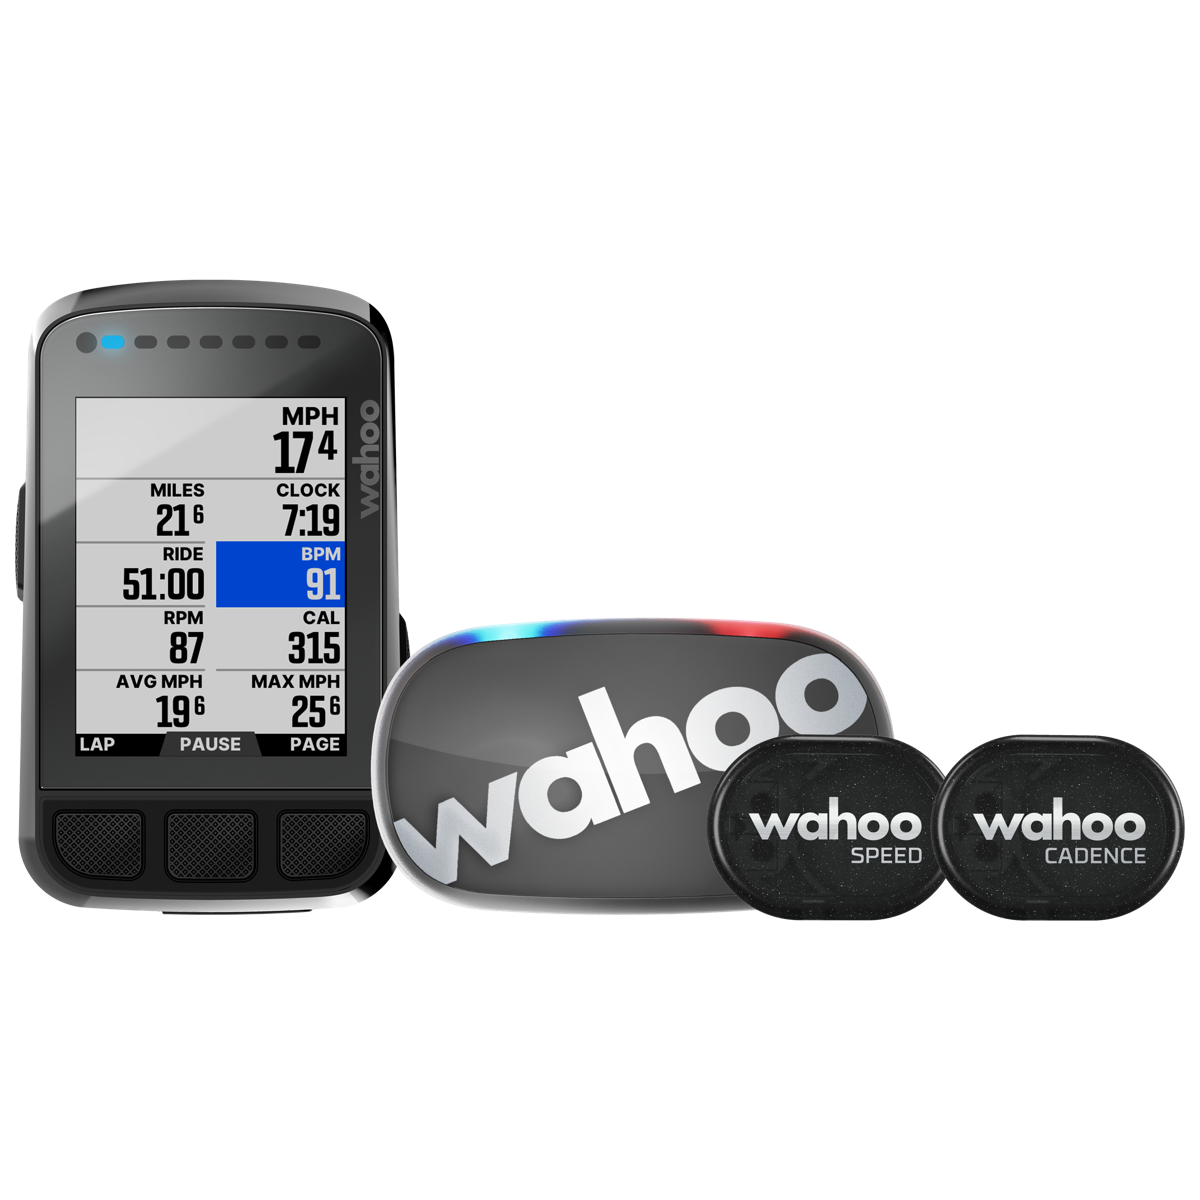 WAHOO elemnt Bullone STEALTH GPS Bike Computer nuovo modello 2020 